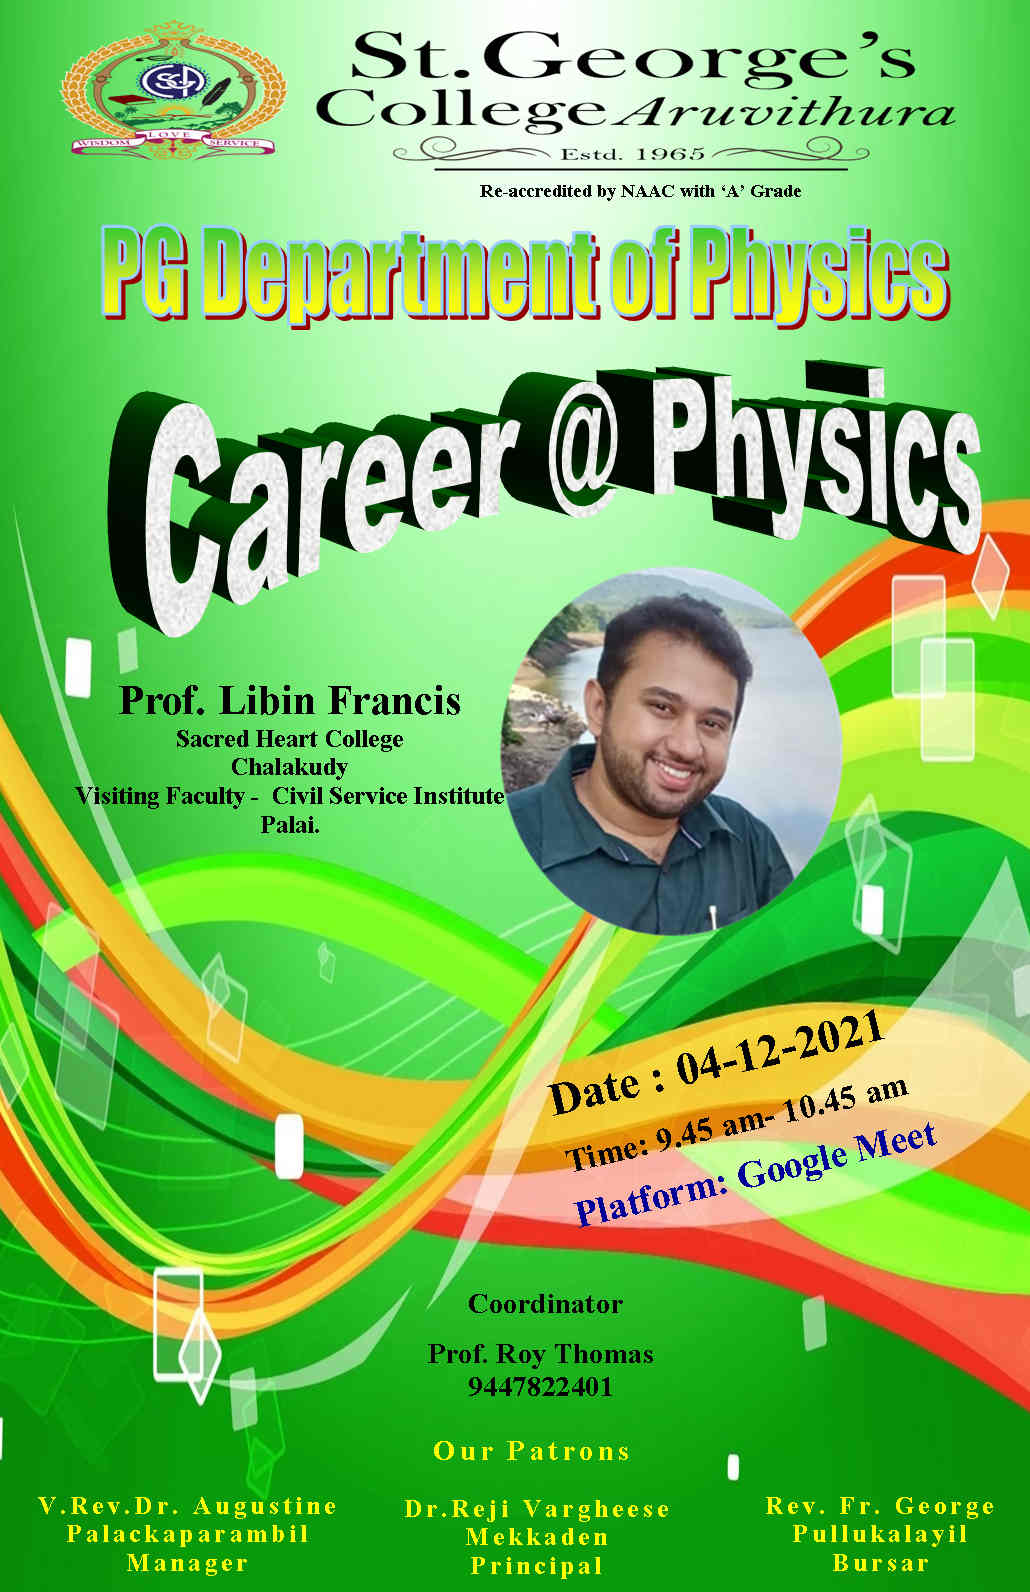 Career @ Physics